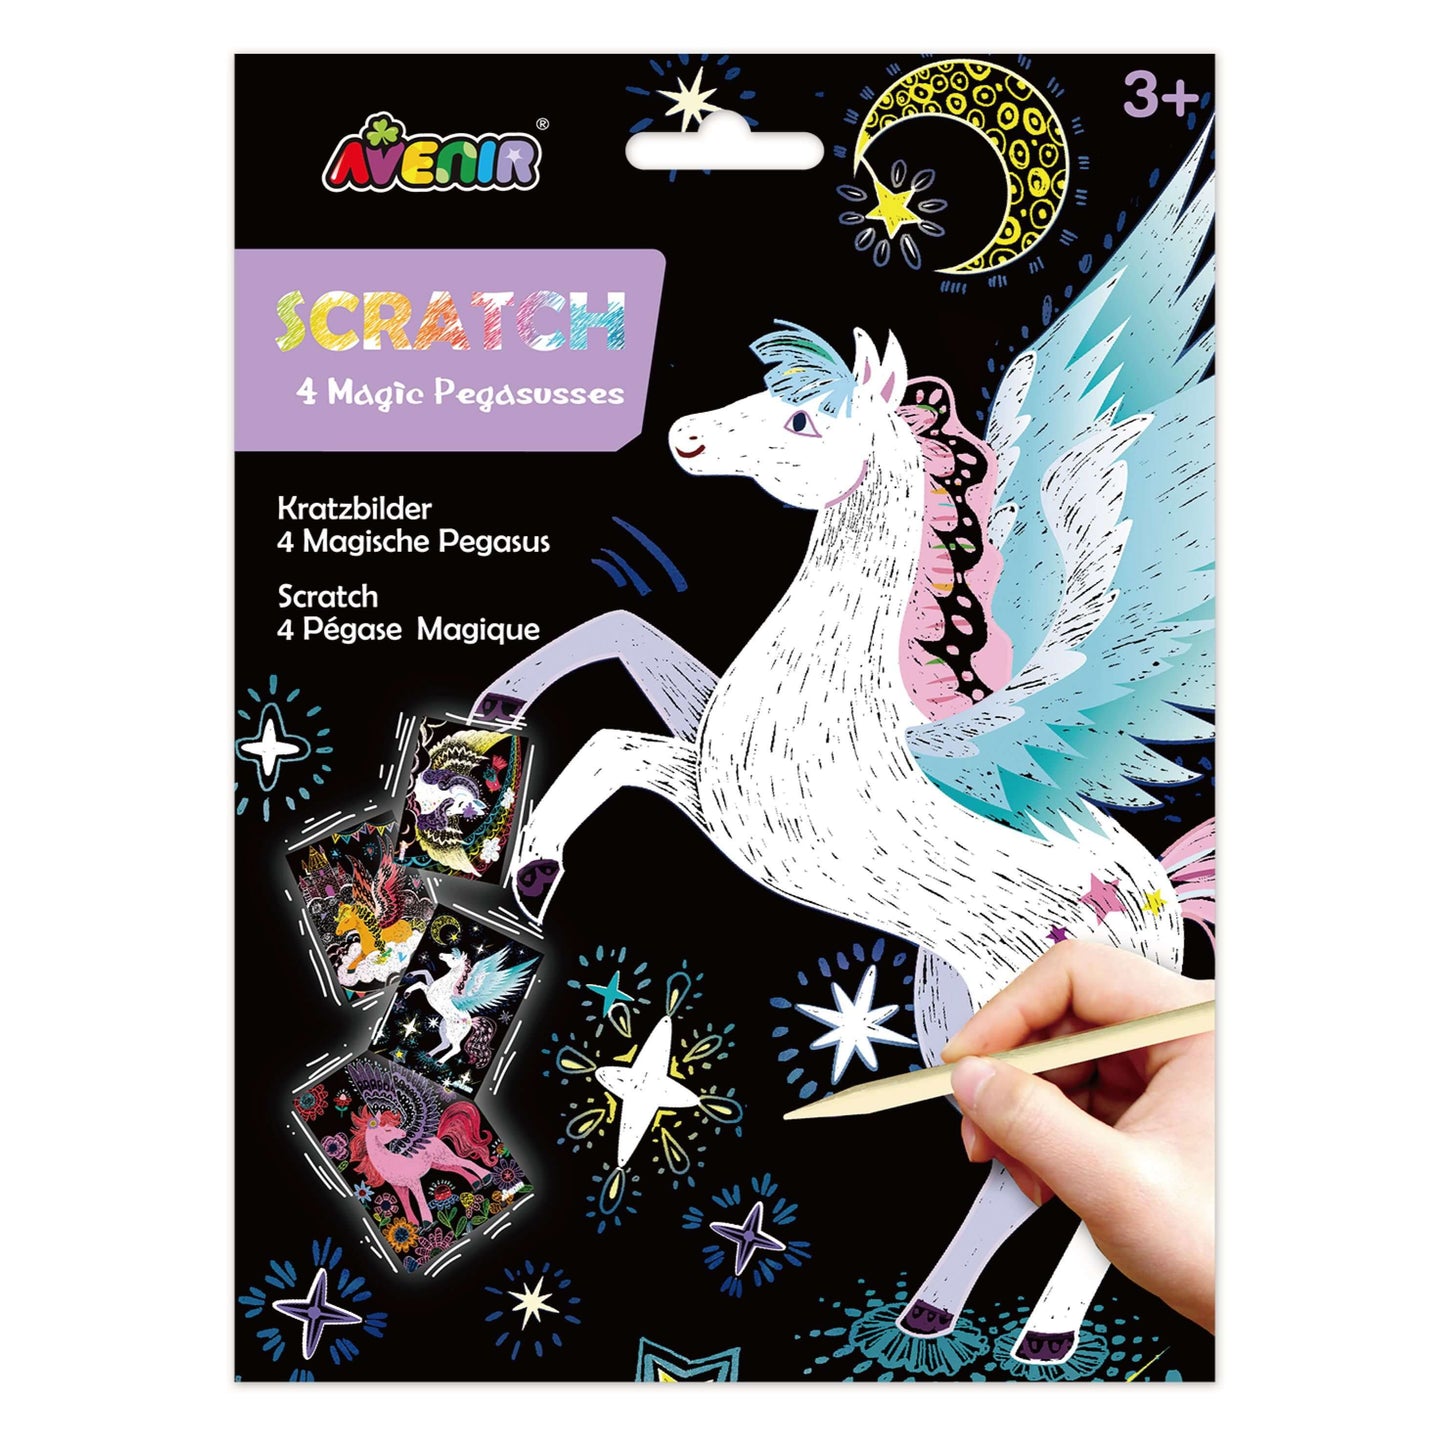 Scratch 4 Magic Pegasuses